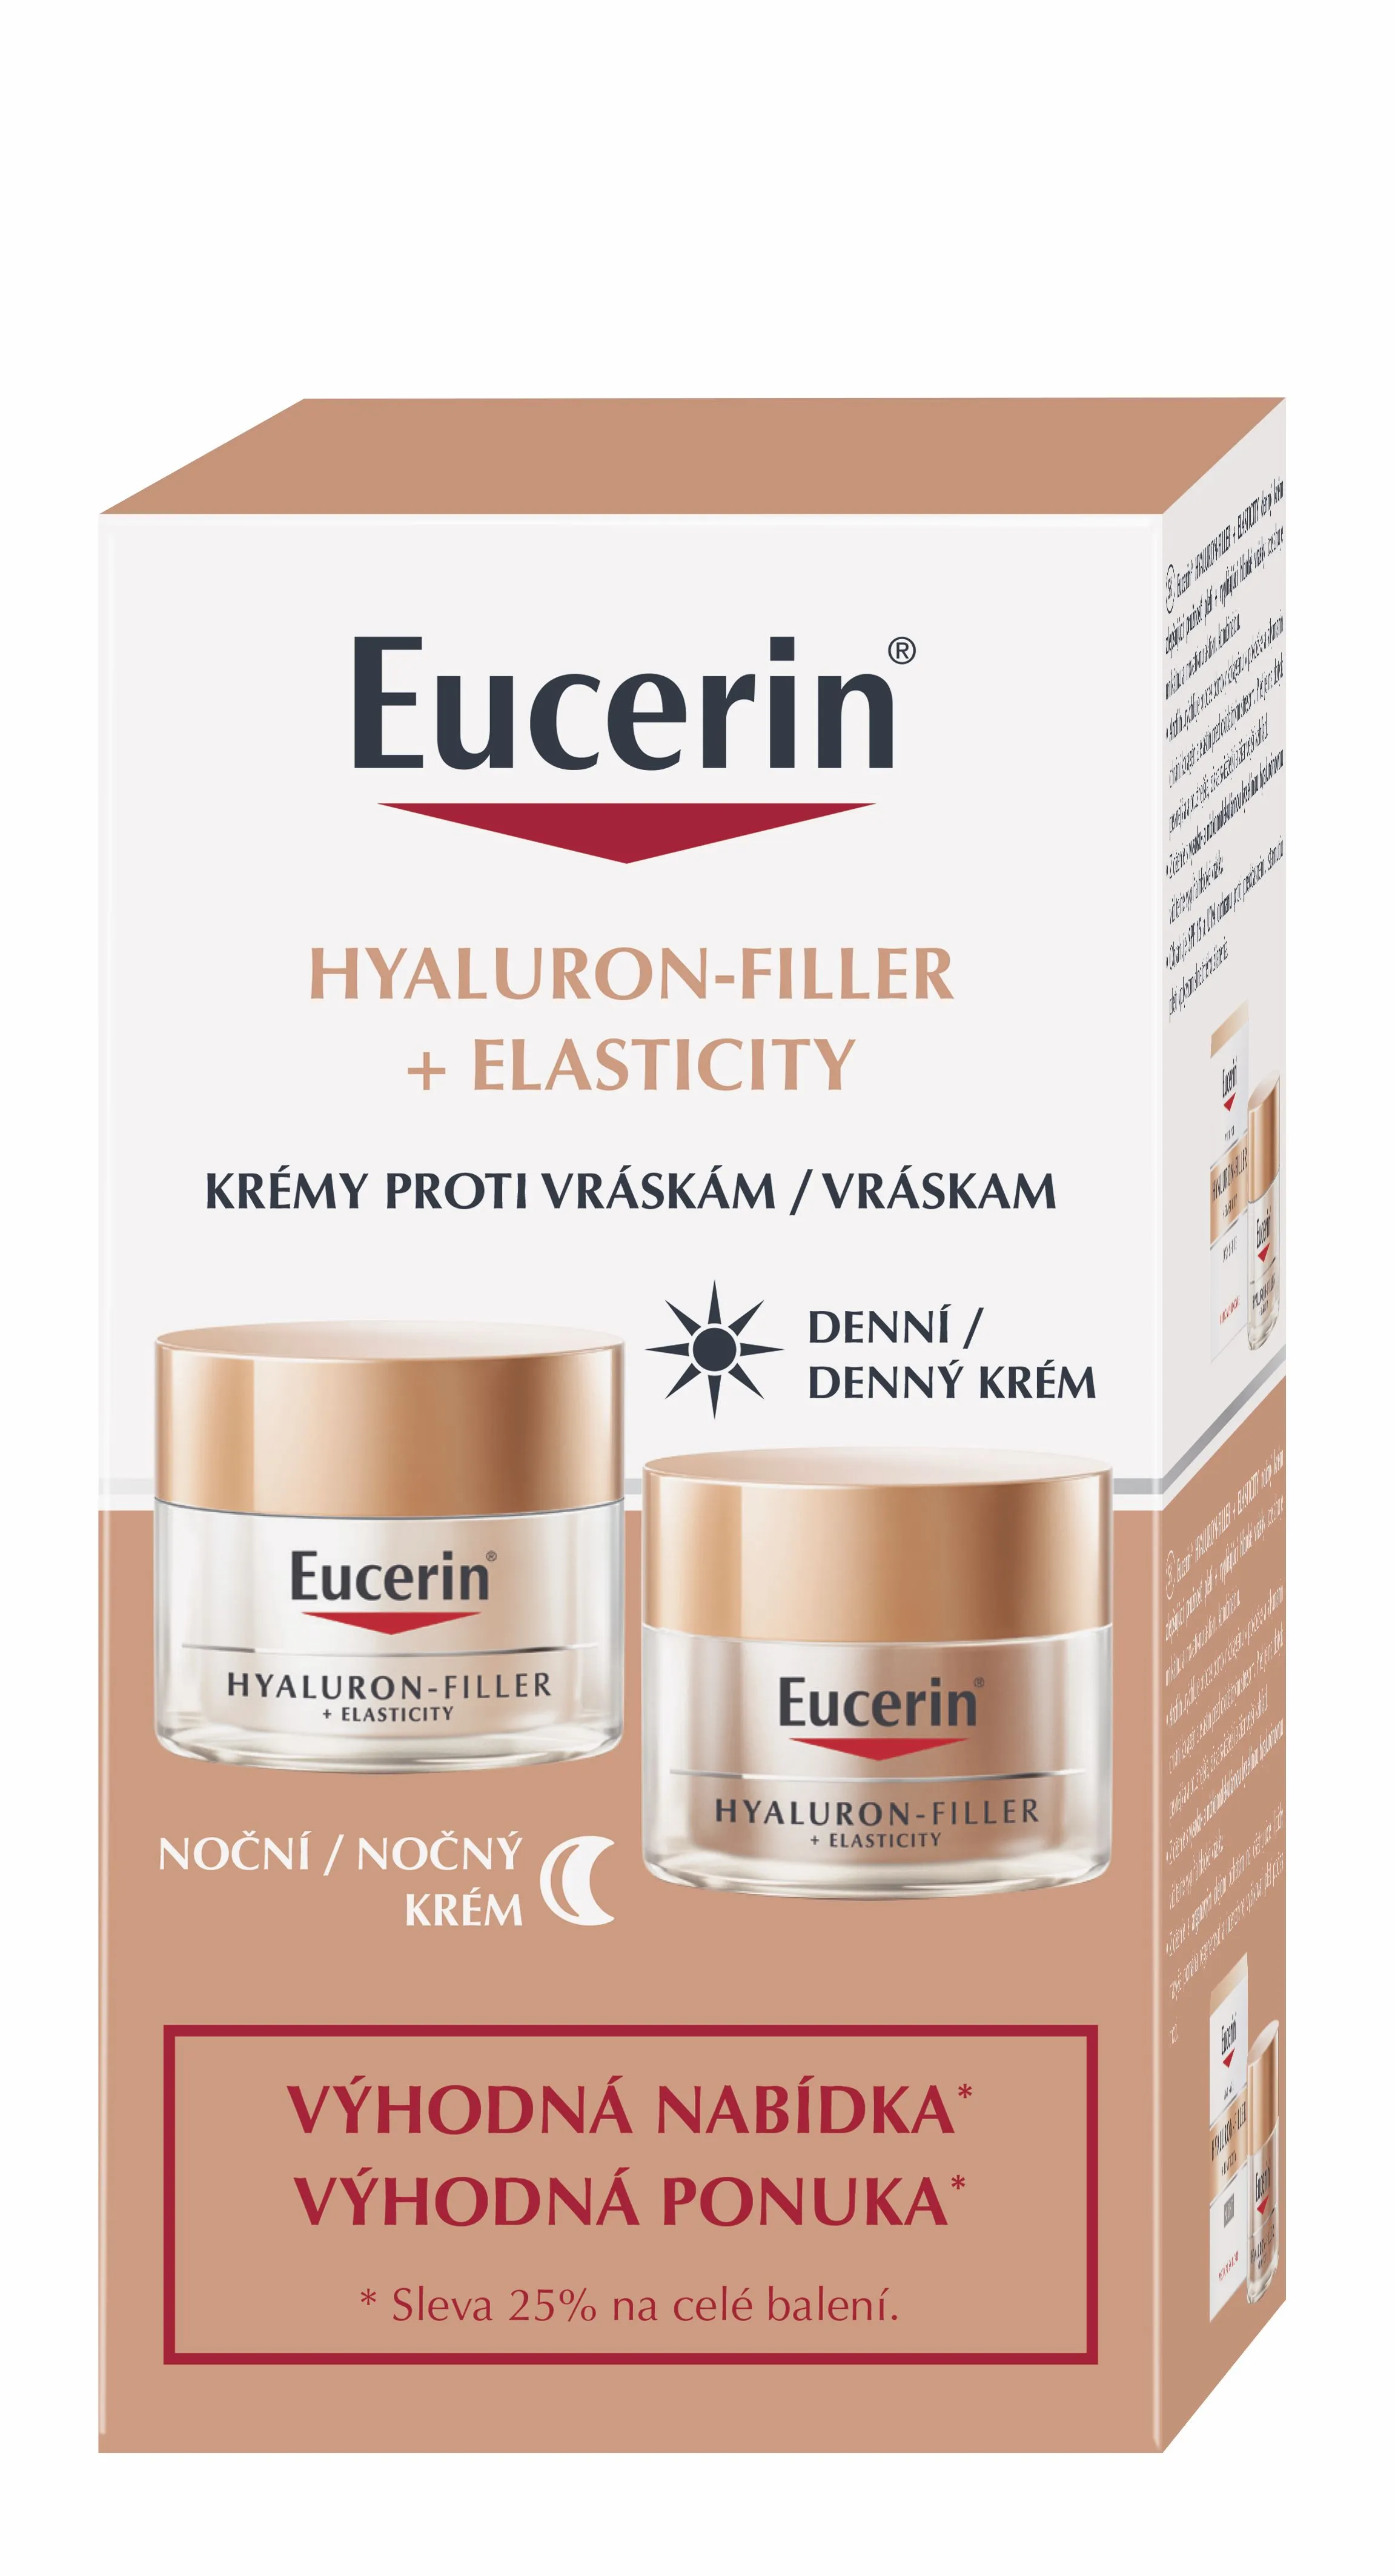 Eucerin Hyaluron-Filler + Elasticity duopack denní + noční krém